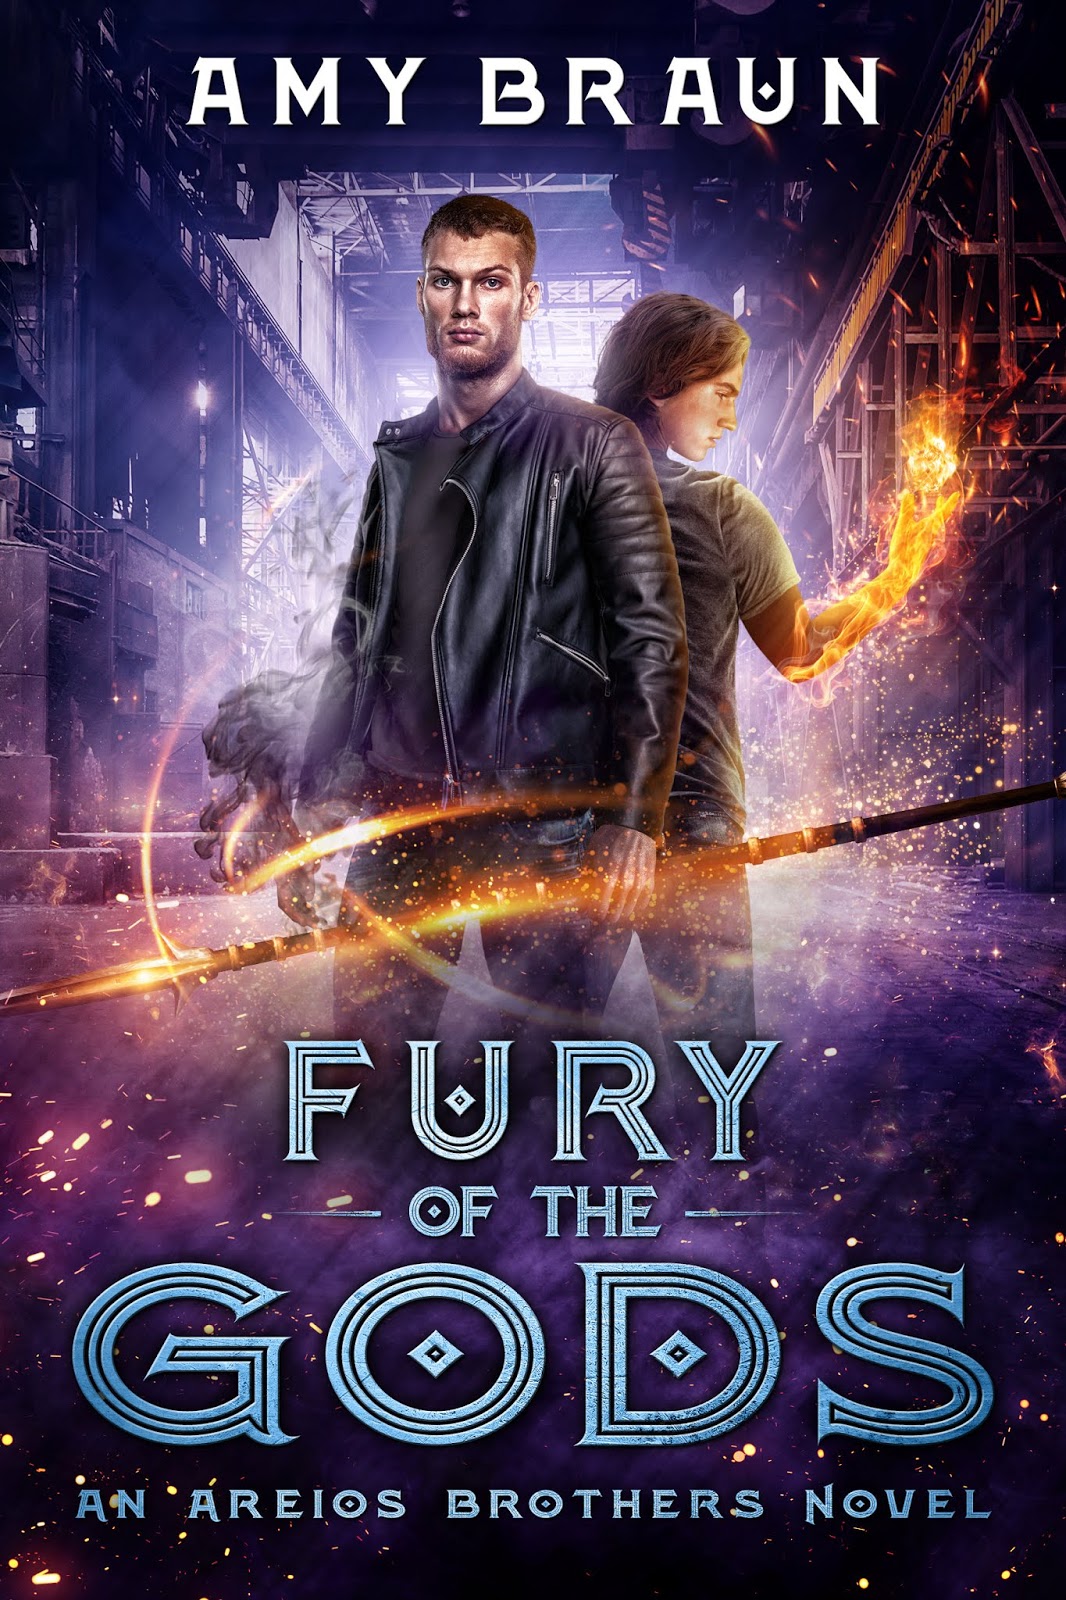 Fury of the Gods. Areios. Brother novel